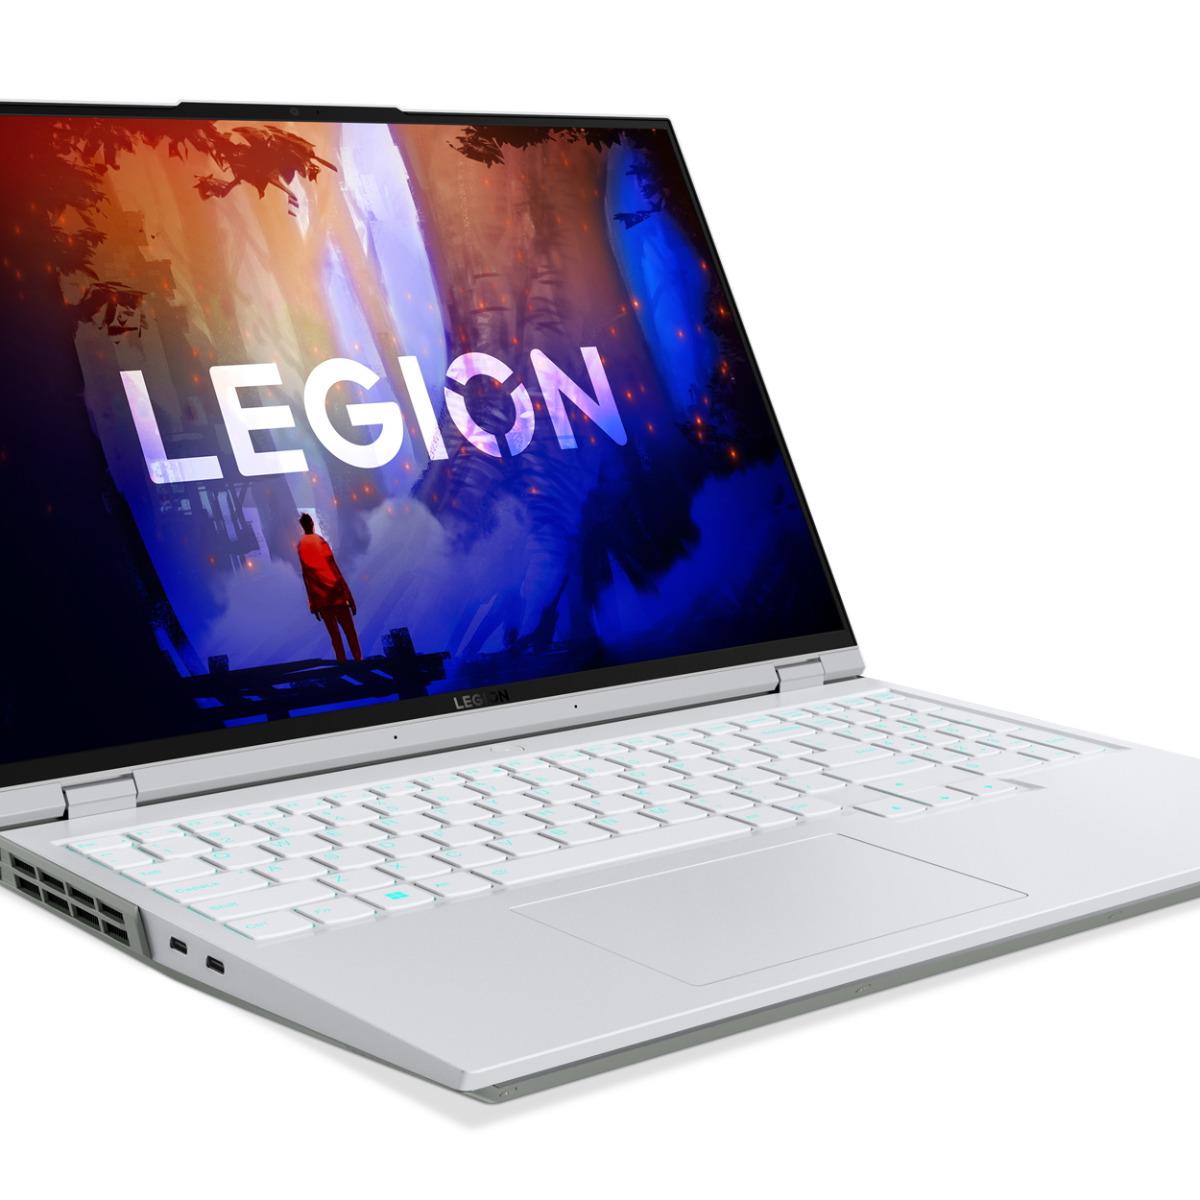 Lenovo Legion 5 Pro Gaming Laptop Review - Next-Gen Laptops Have Arrived